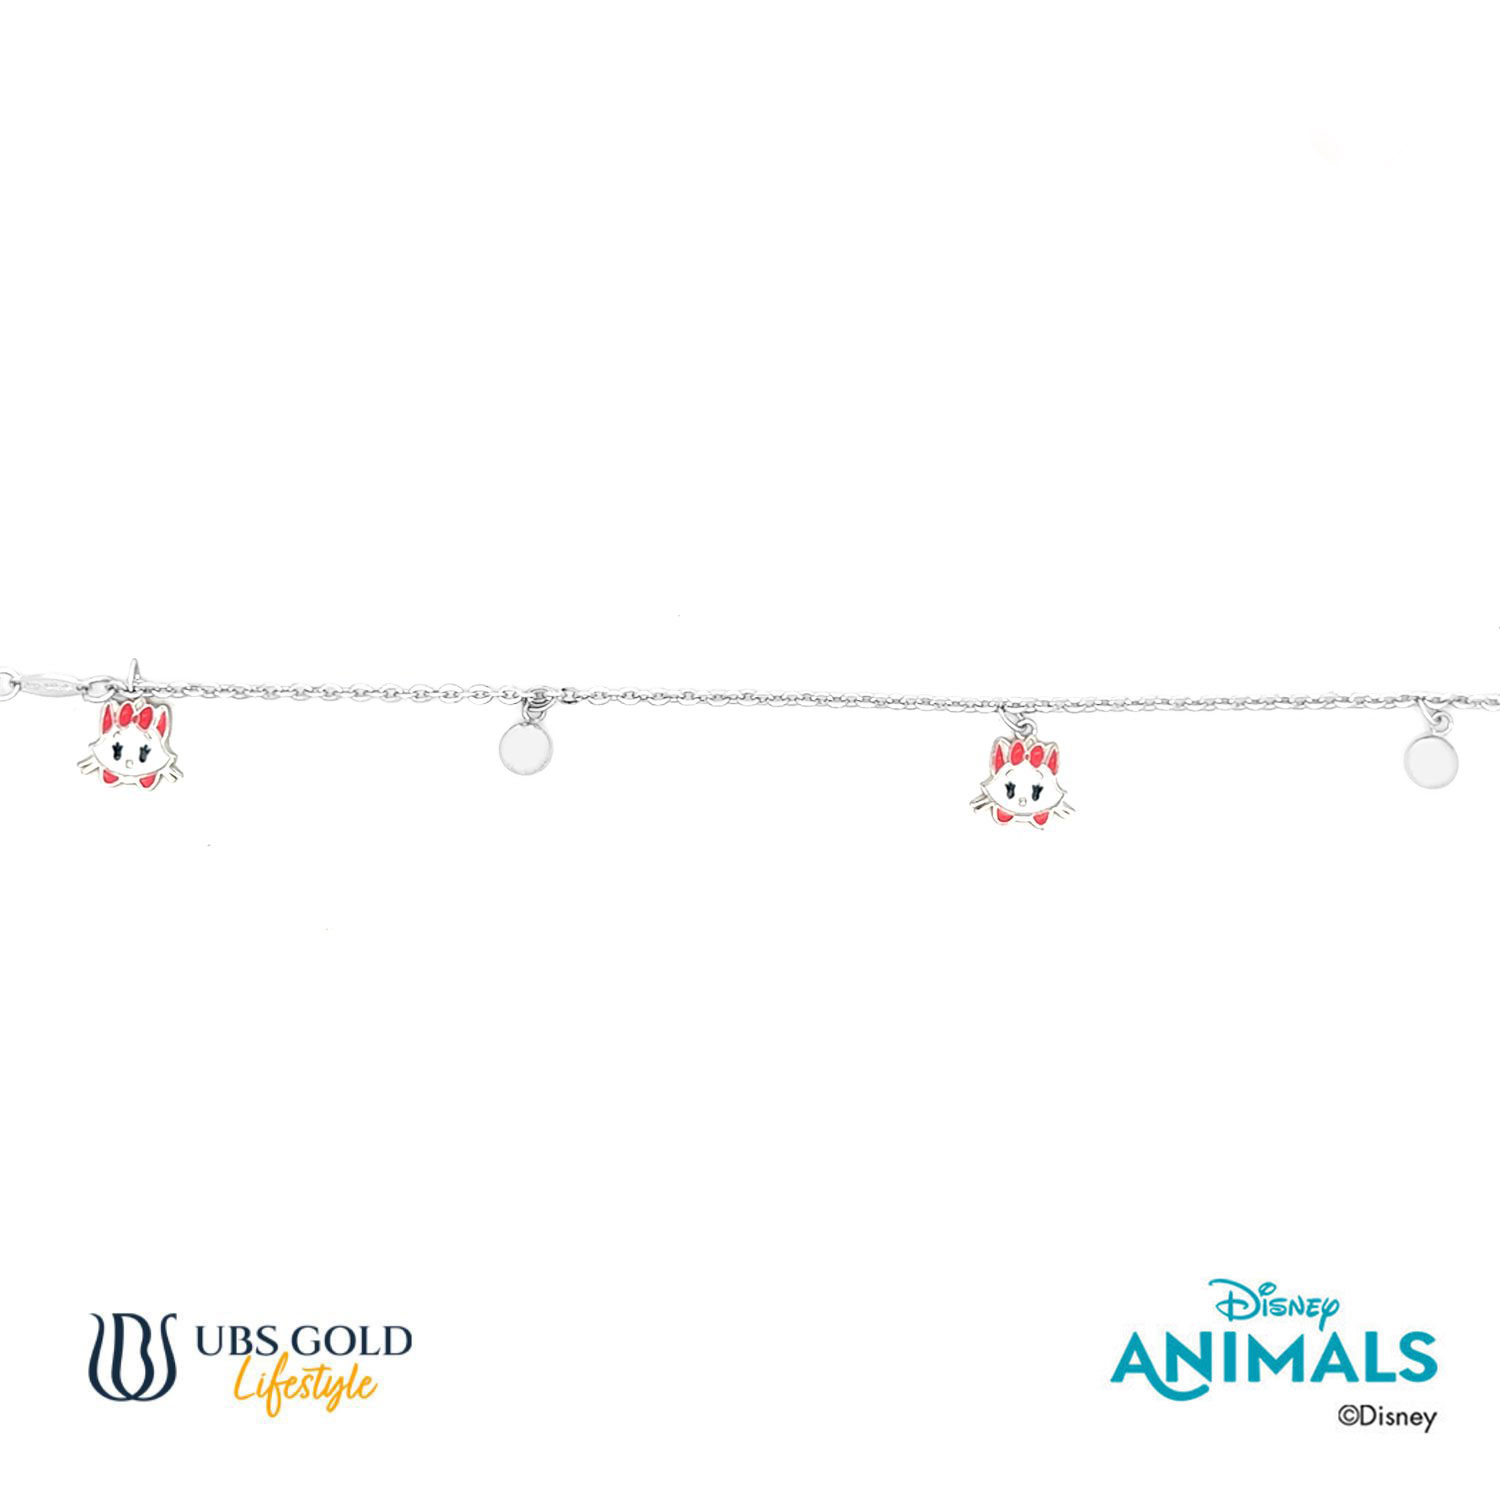 UBS Gold Gelang Emas Anak Disney Animals - Hgy0094 - 17K